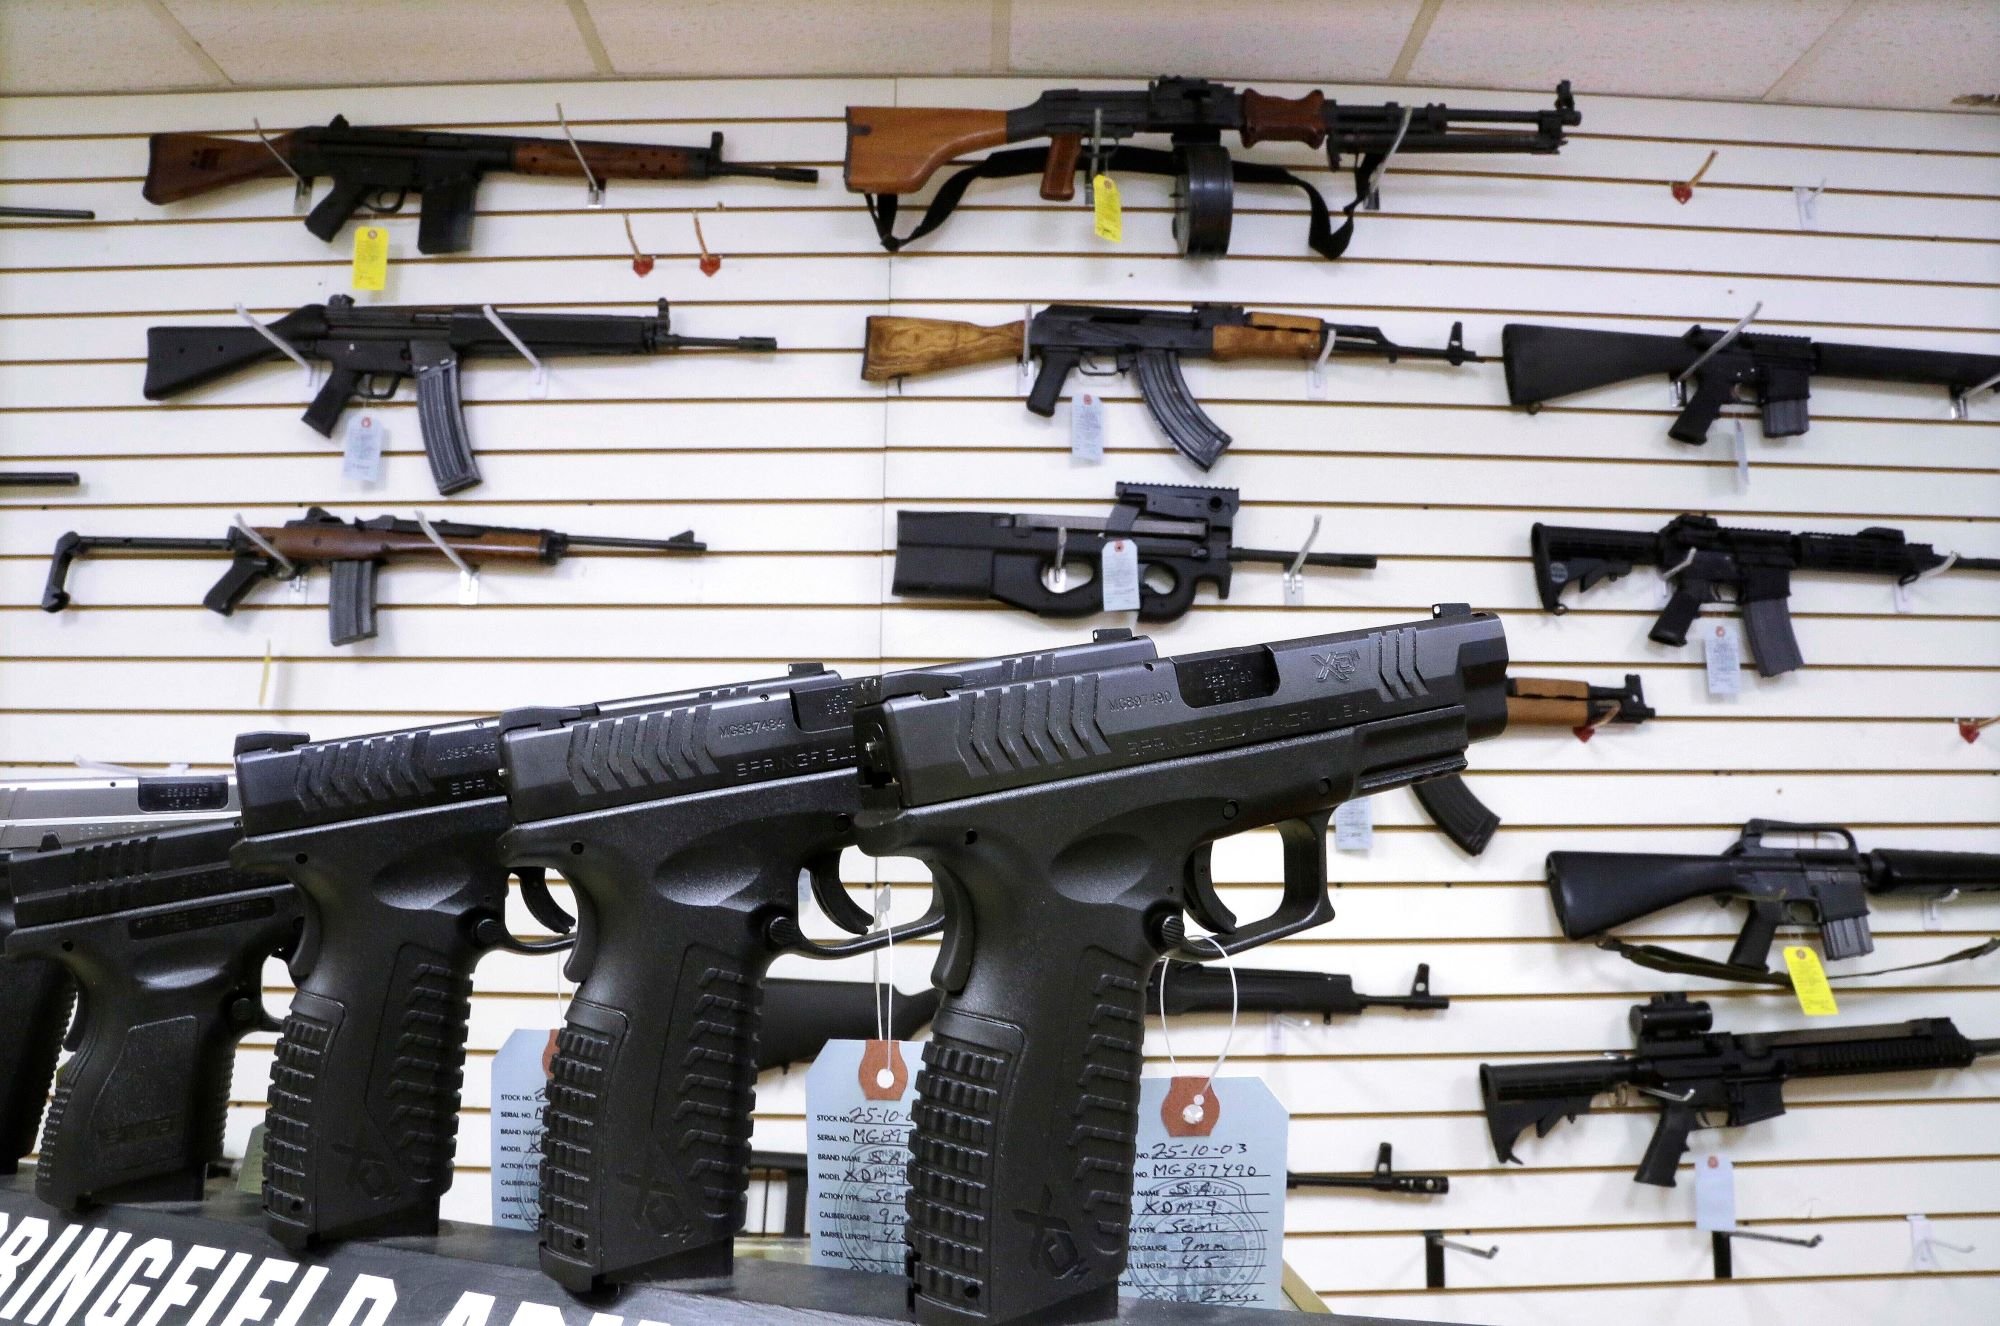 Criminal Justice Expert Explains Semi-Automatic Firearms